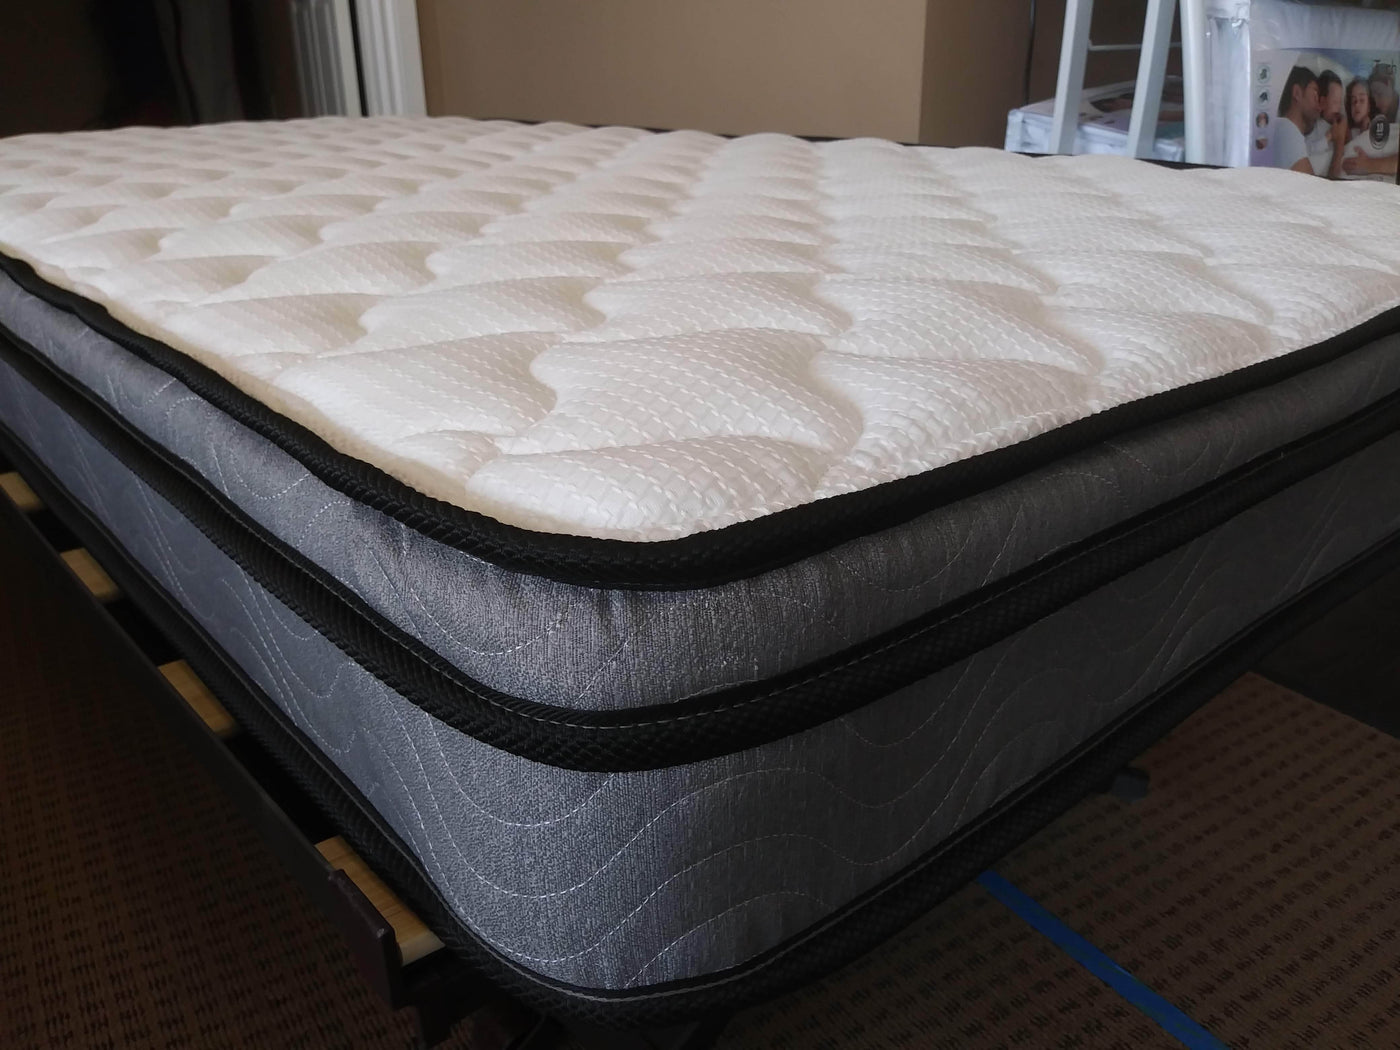 southerland mattress reviews reddit